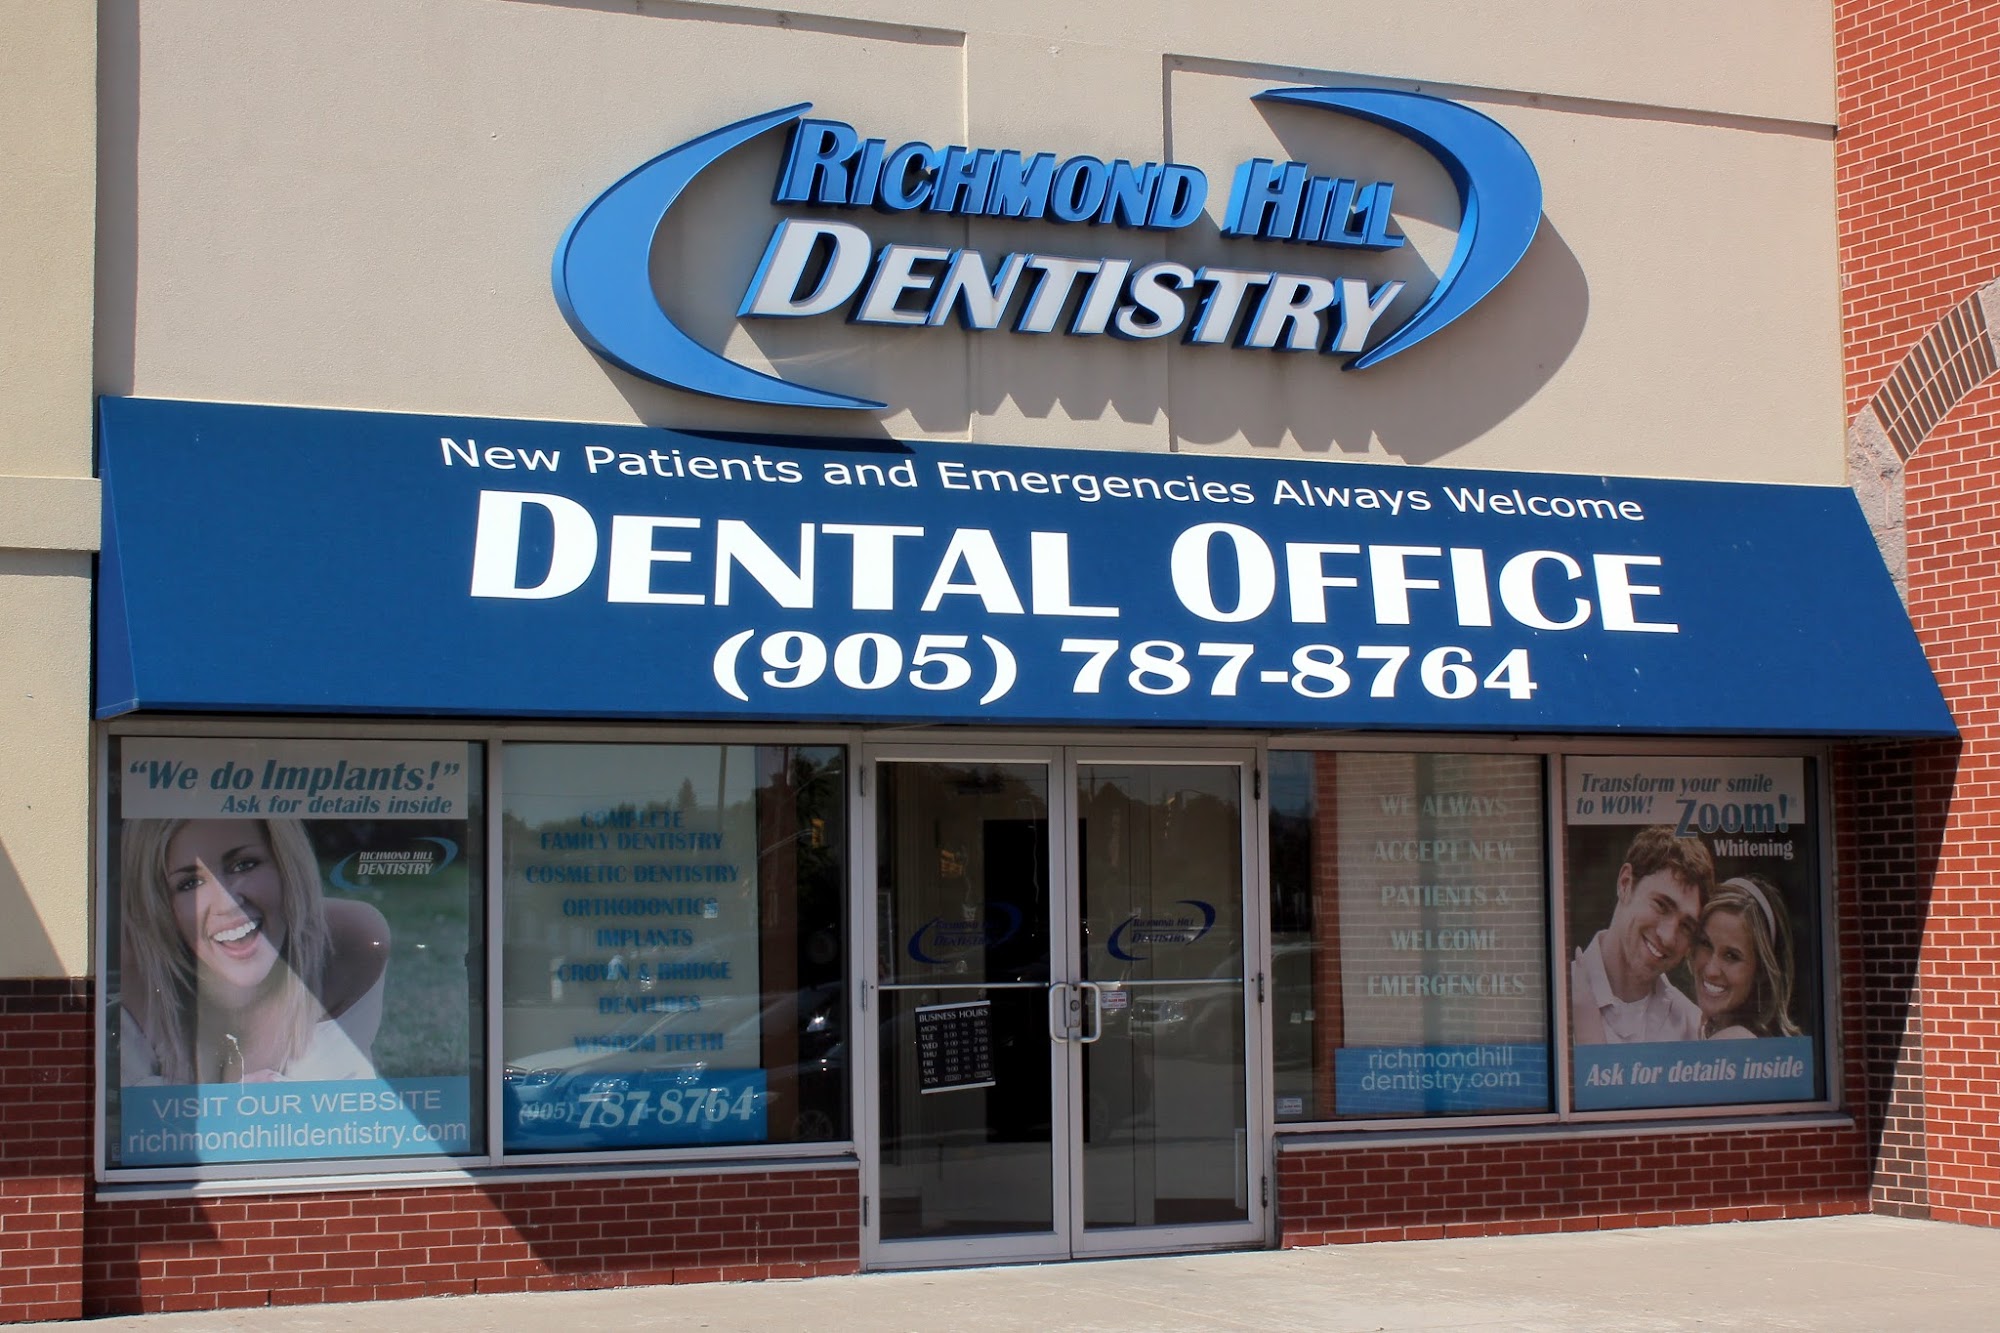 Richmond Hill Dentistry